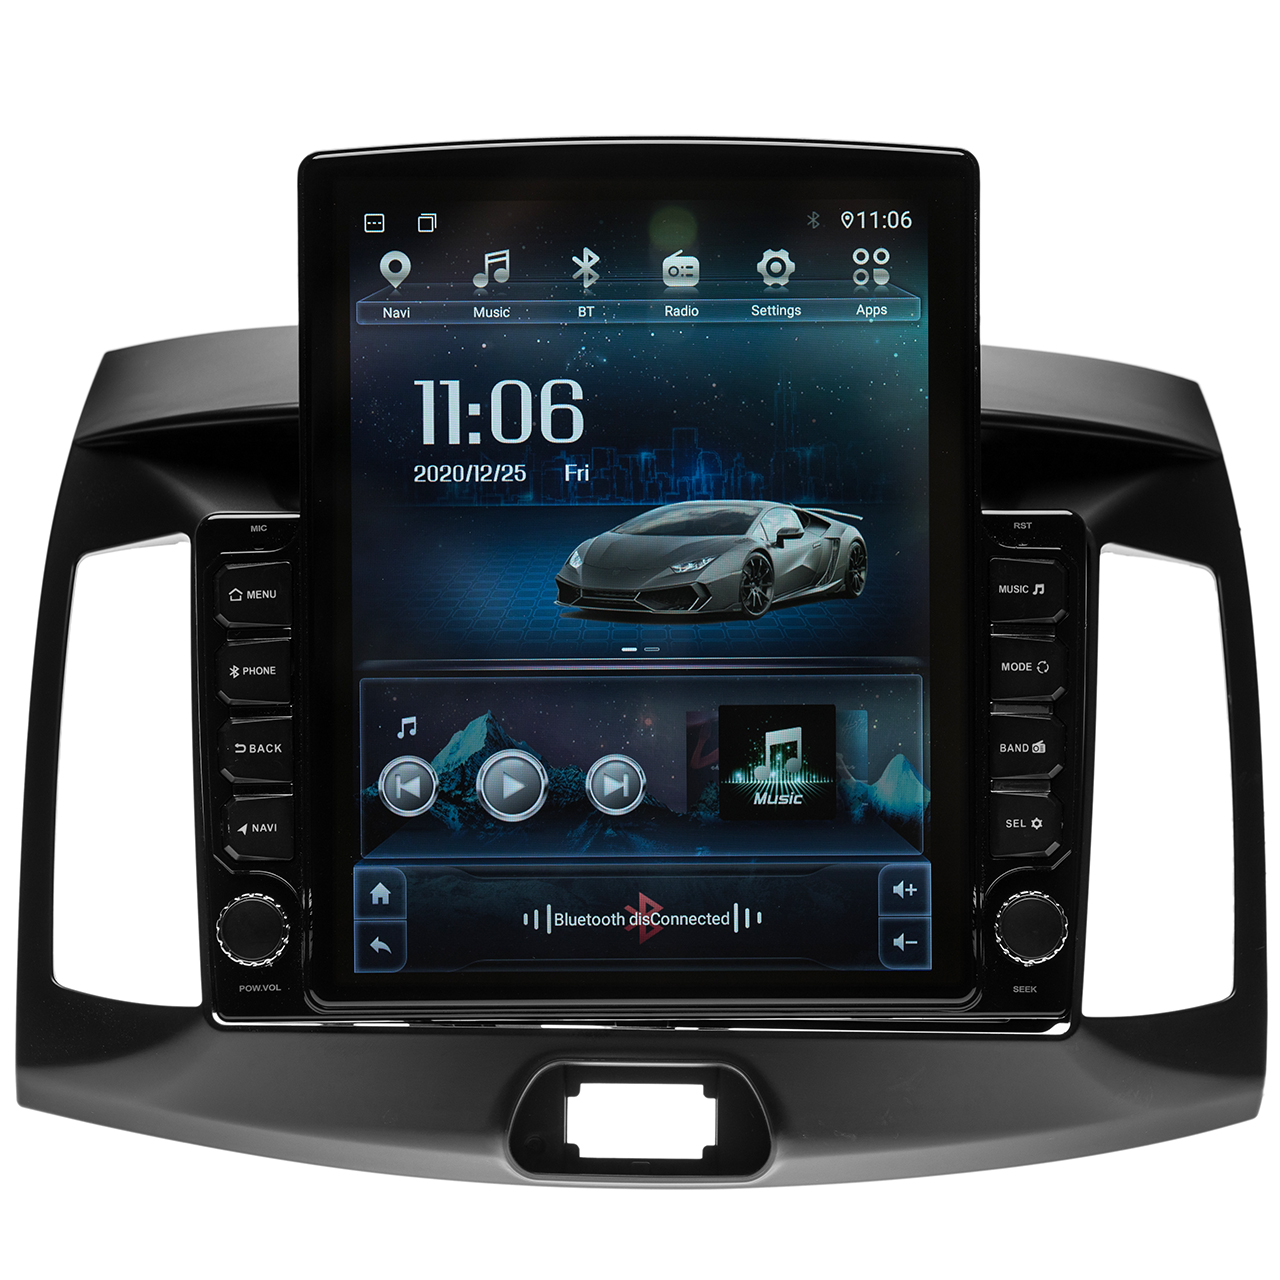 Navigatie AUTONAV ECO Android GPS Dedicata Hyundai Elantra 2006-2010, Model XPERT Memorie 16GB Stocare, 1GB DDR3 RAM, Butoane Si Volum Fizice, Display Vertical Stil Tesla 10